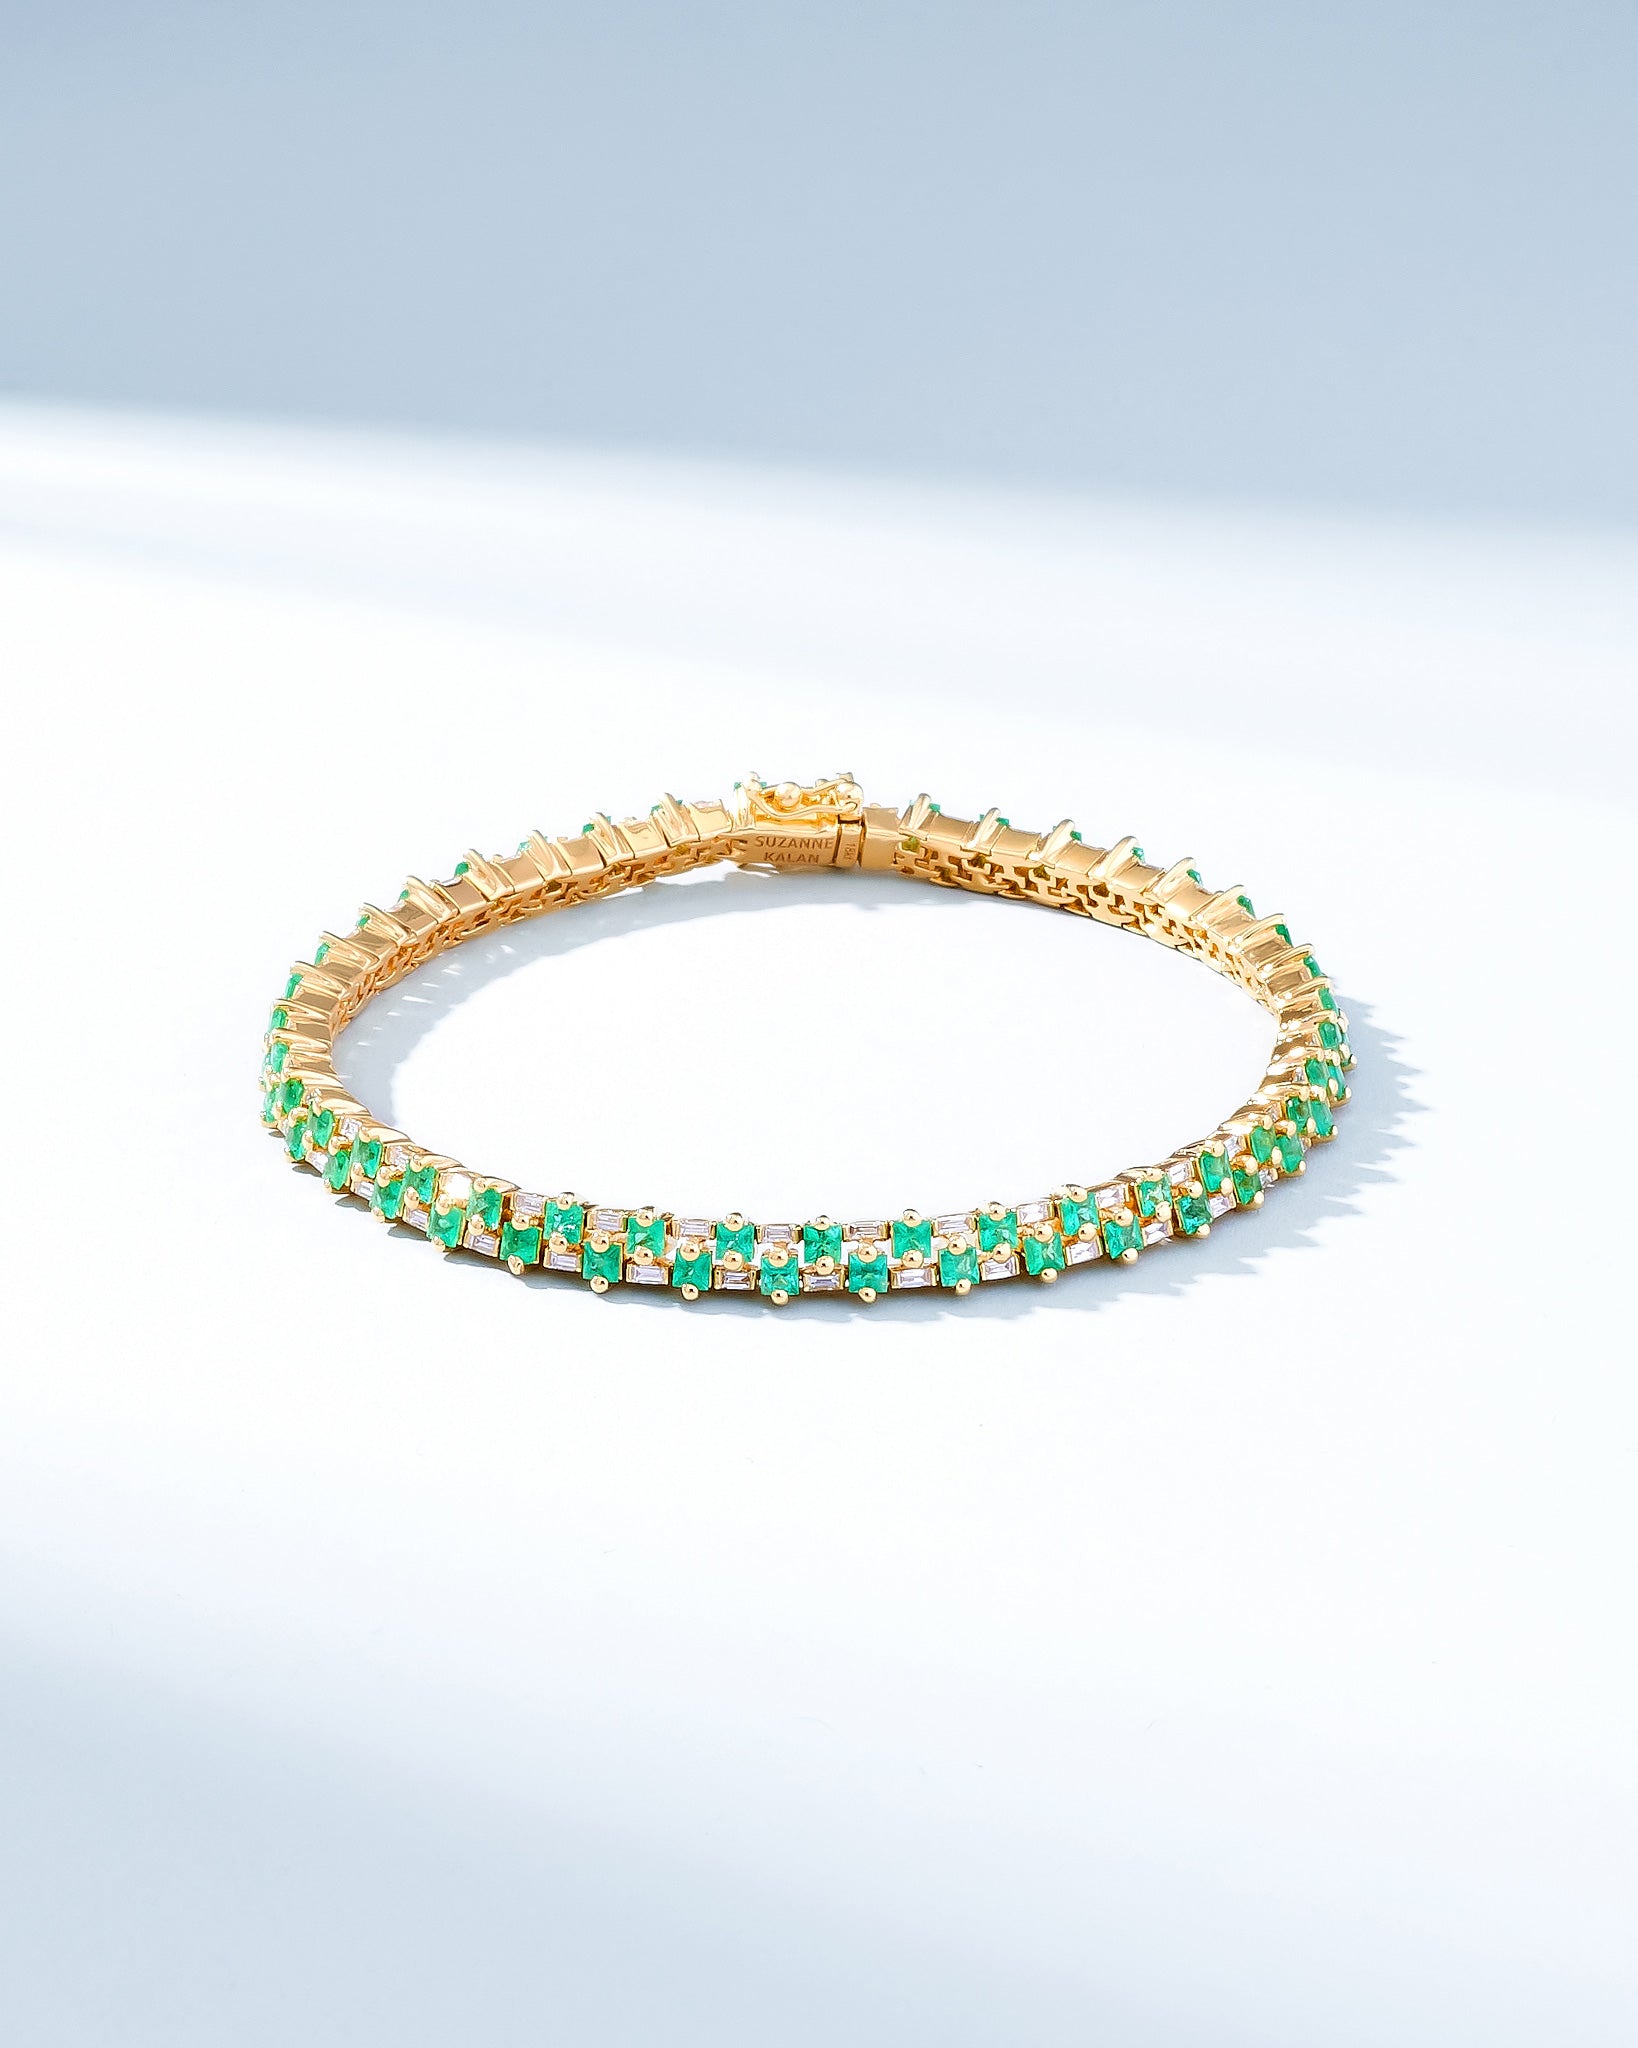 Suzanne Kalan Princess Mini Stack Emerald Tennis Bracelet in 18k yellow gold